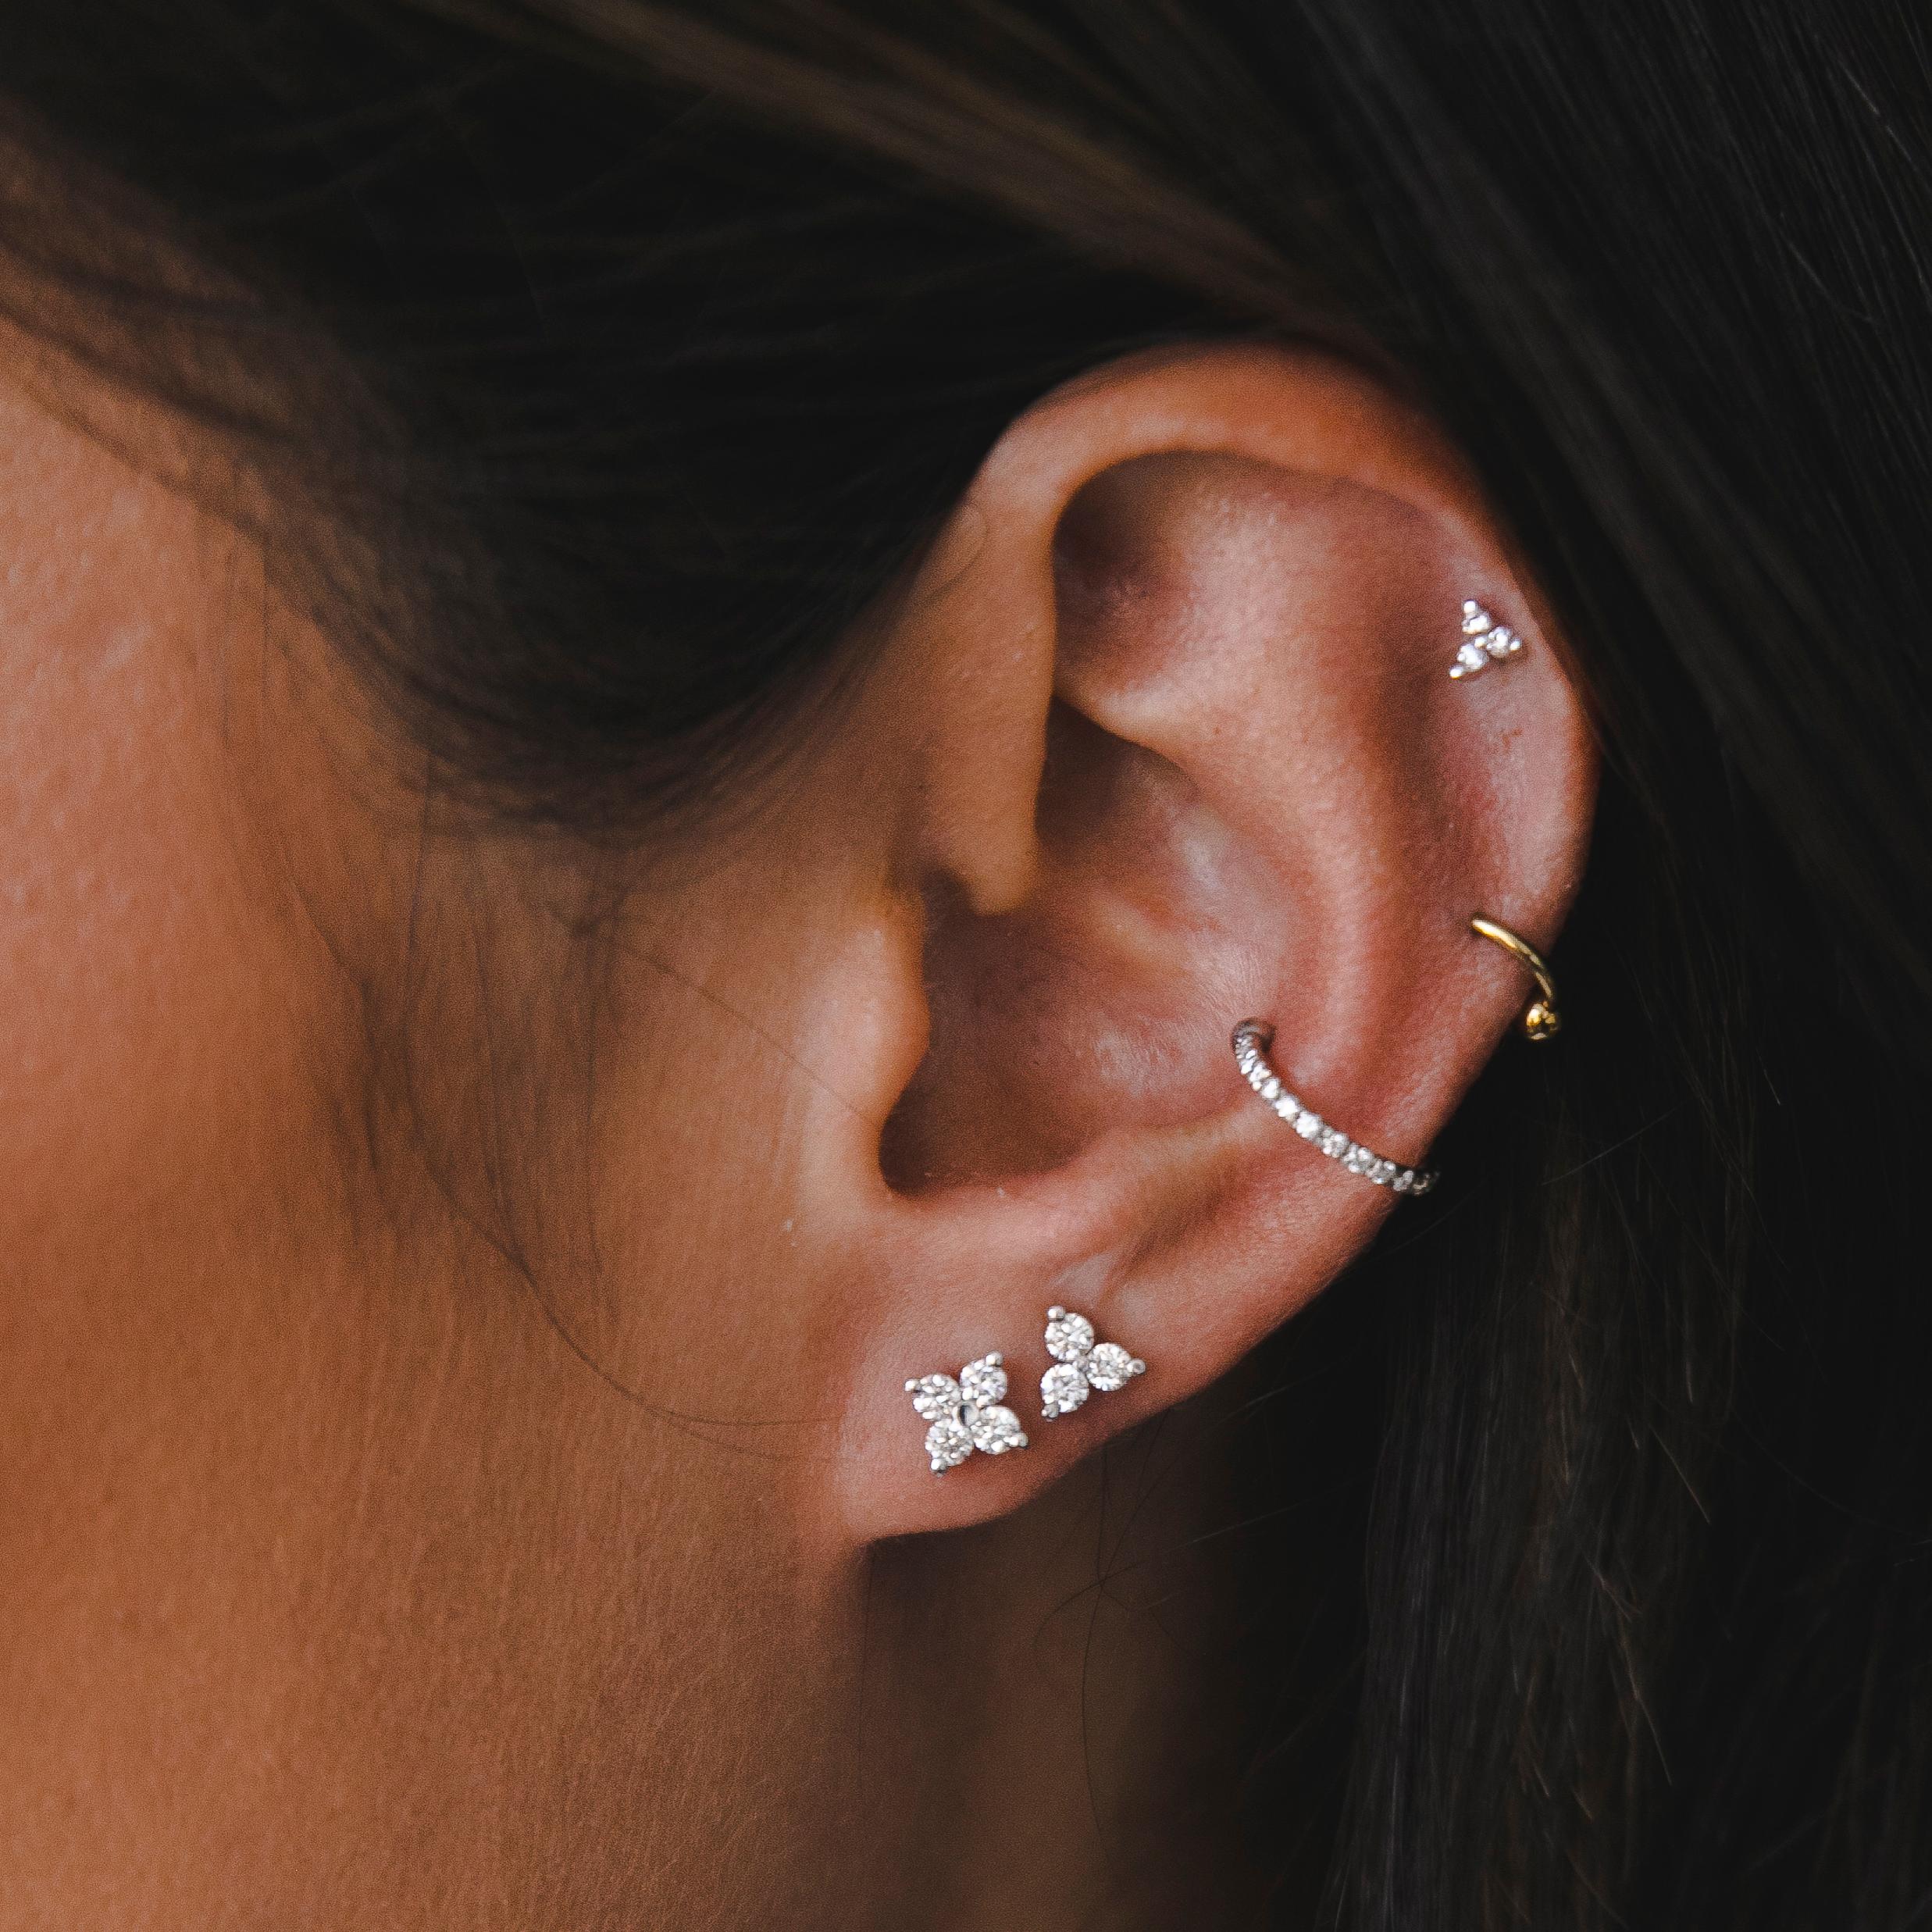 14k white gold helix earrings